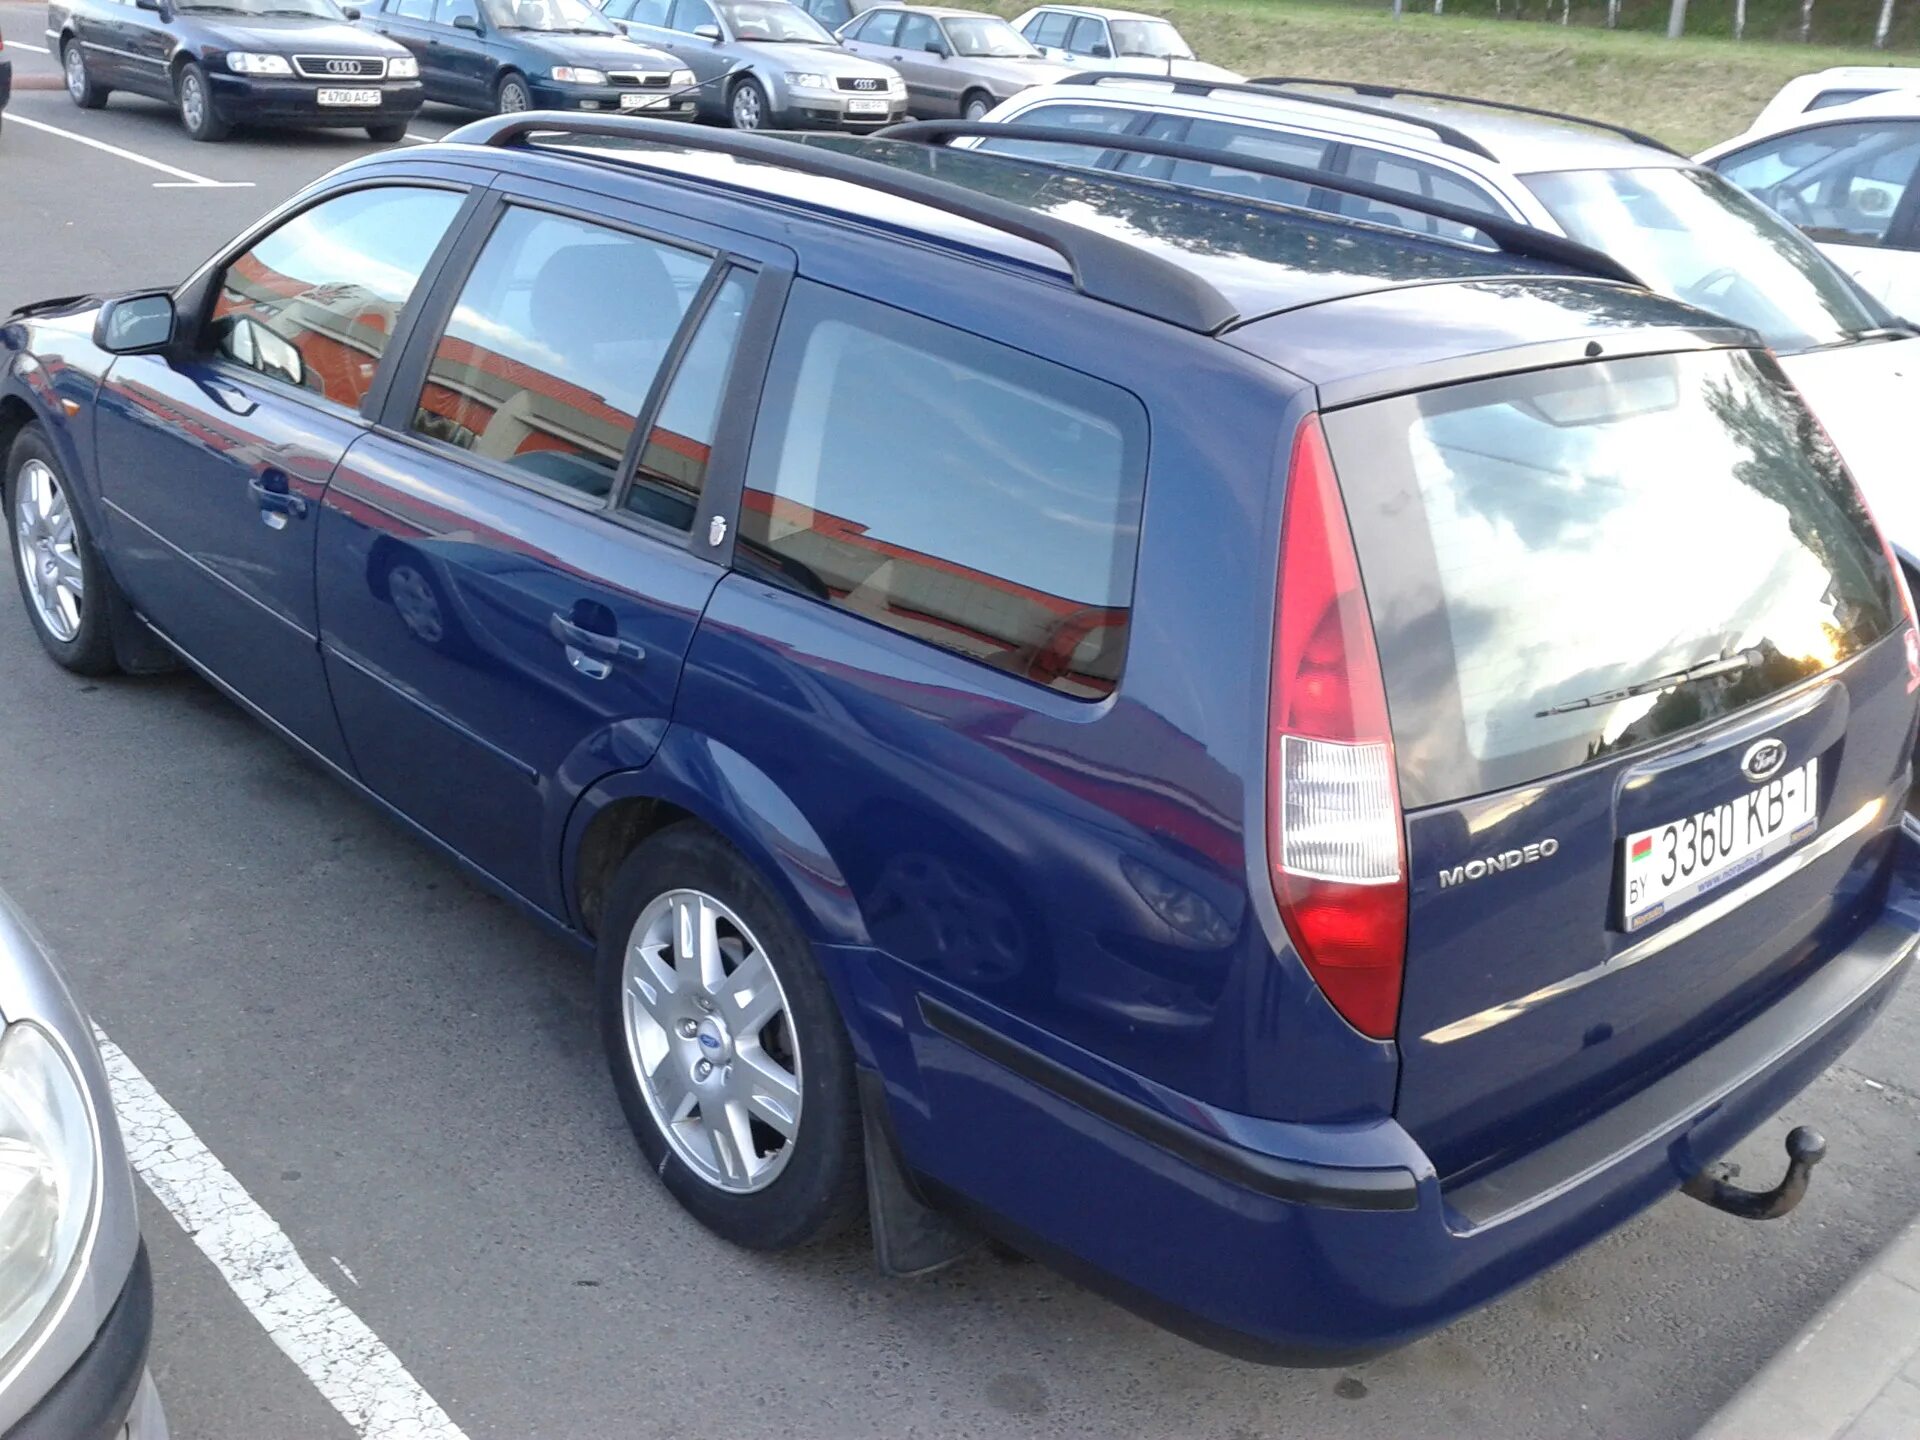 Opel Astra универсал 1998. Мазда 626 gf универсал. Opel Astra 2002 универсал. Машины универсал 2000.